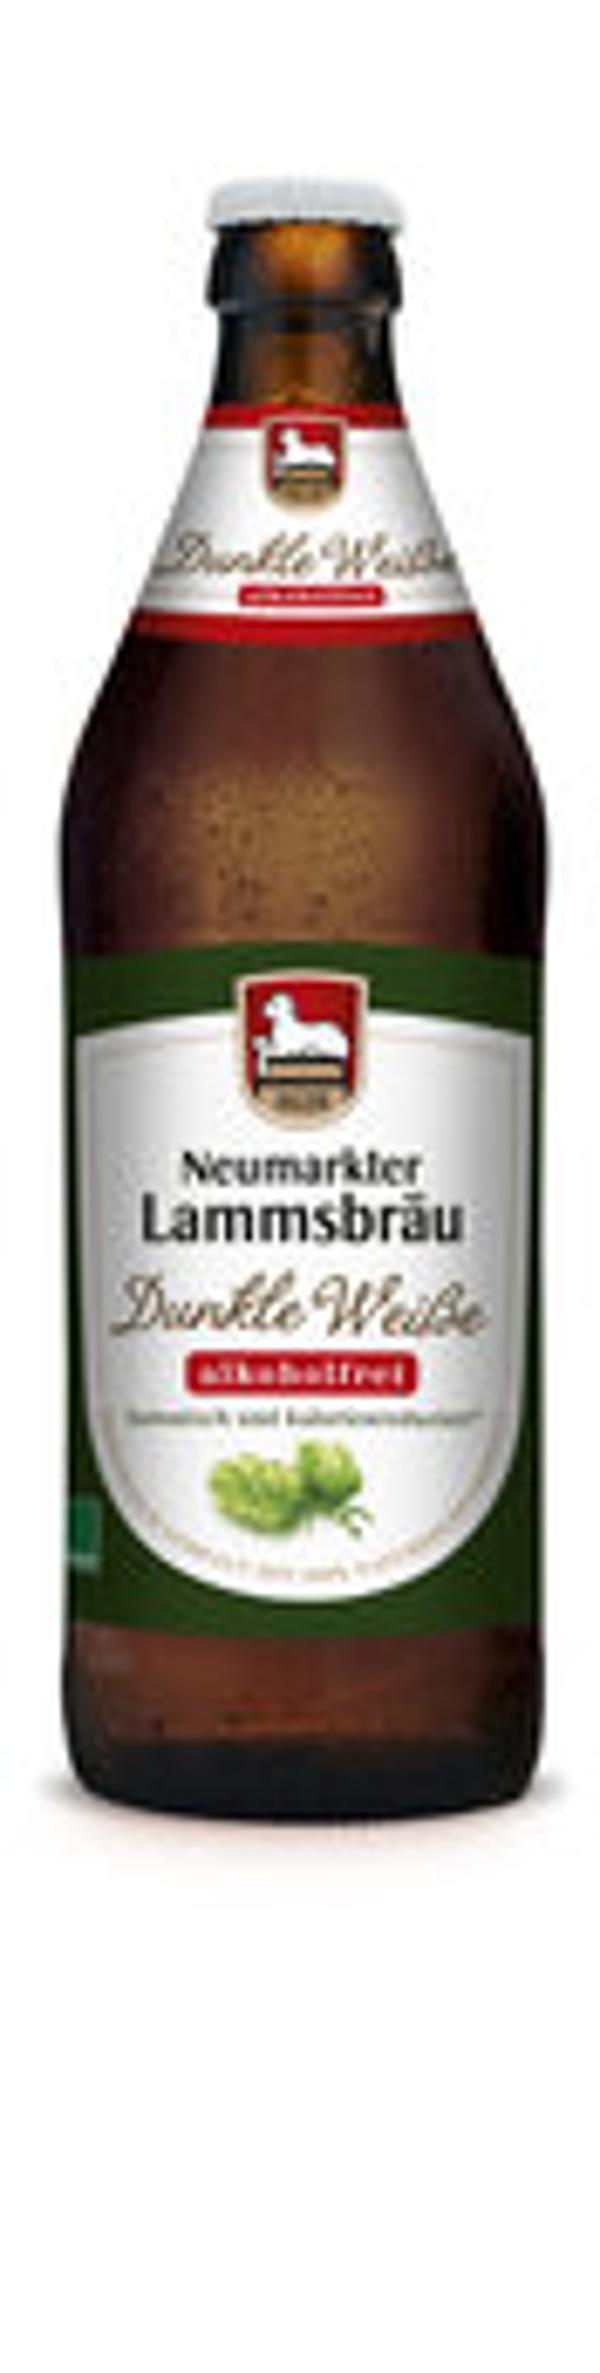 Produktfoto zu Lammsbräu Dunkle Weisse alkoho